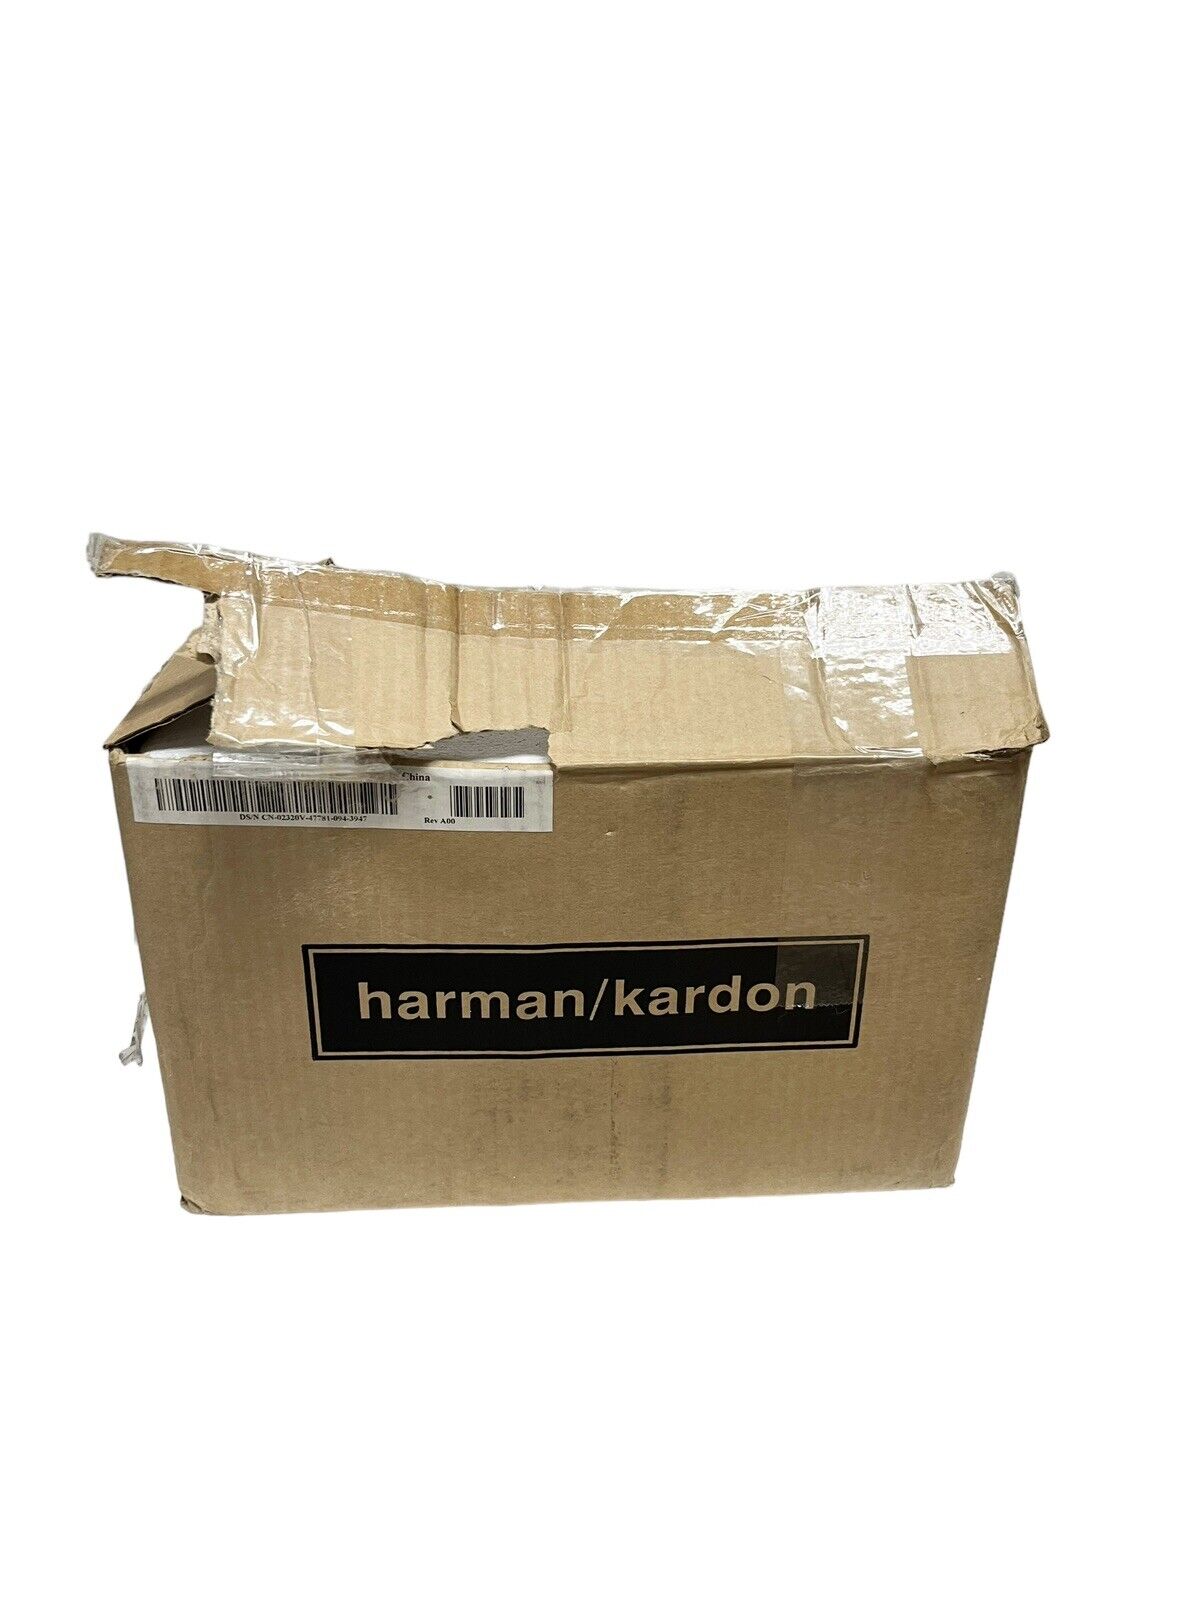 Harman Kardon 02320V Multimedia Computer Speaker System NEW Open Box Vintage